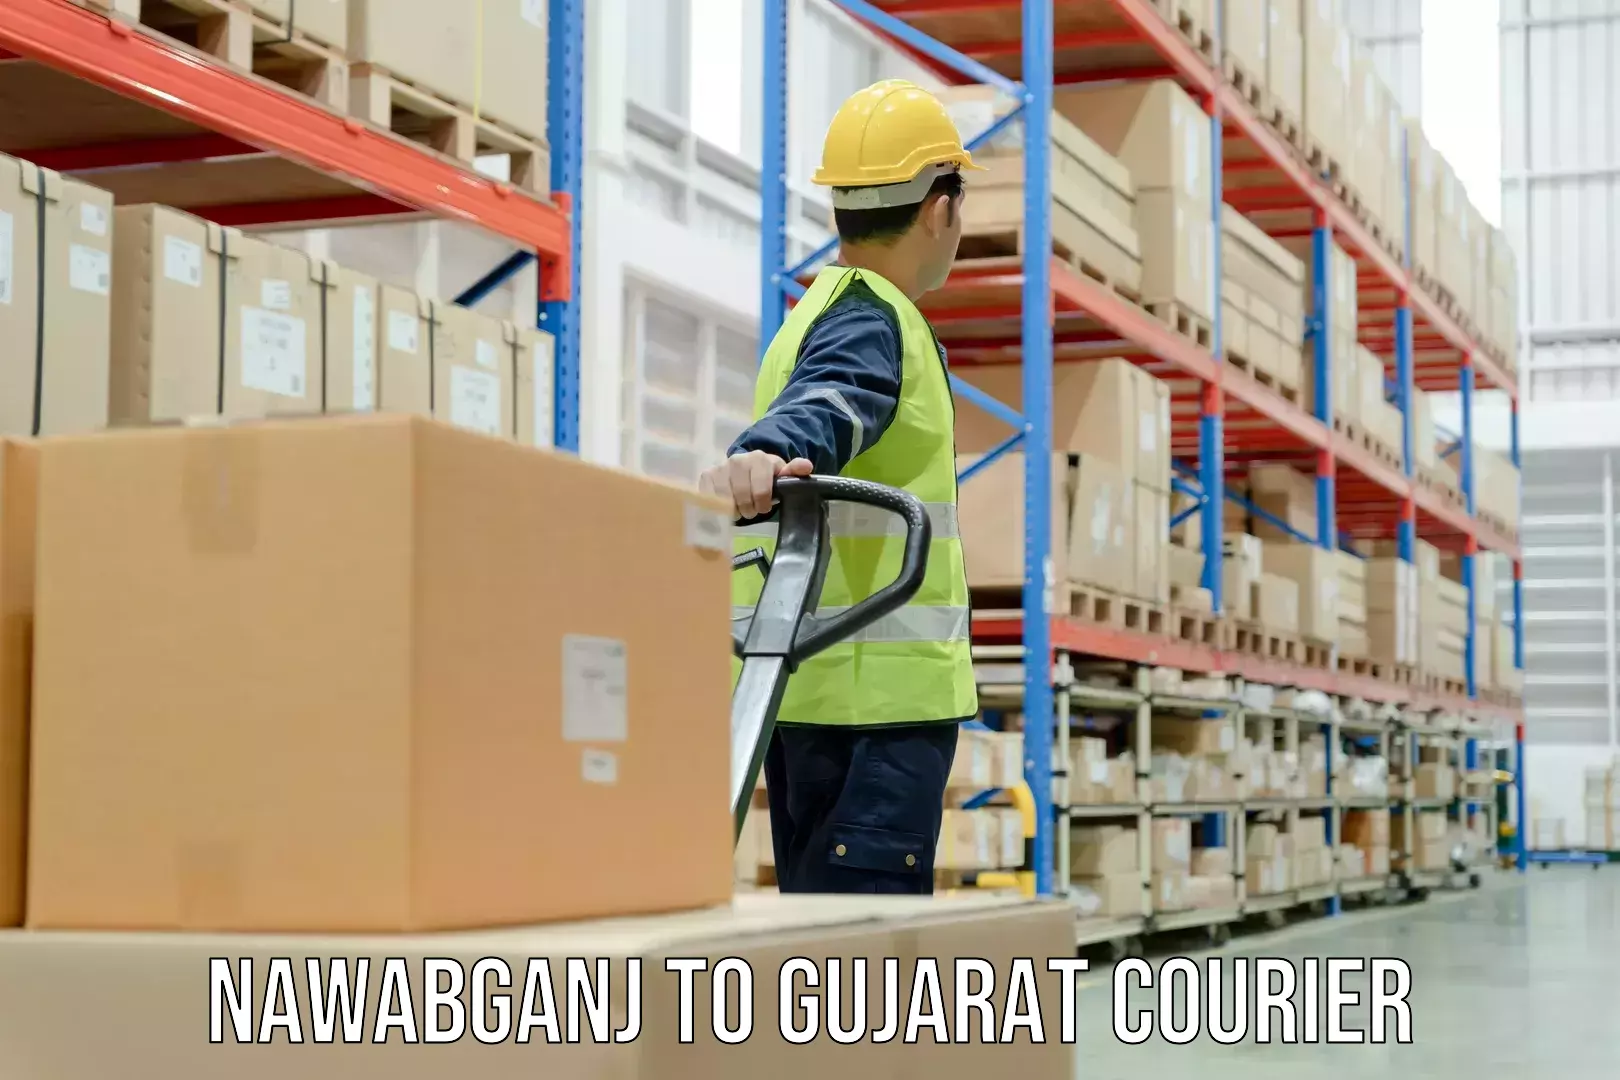 Express delivery network Nawabganj to Gujarat